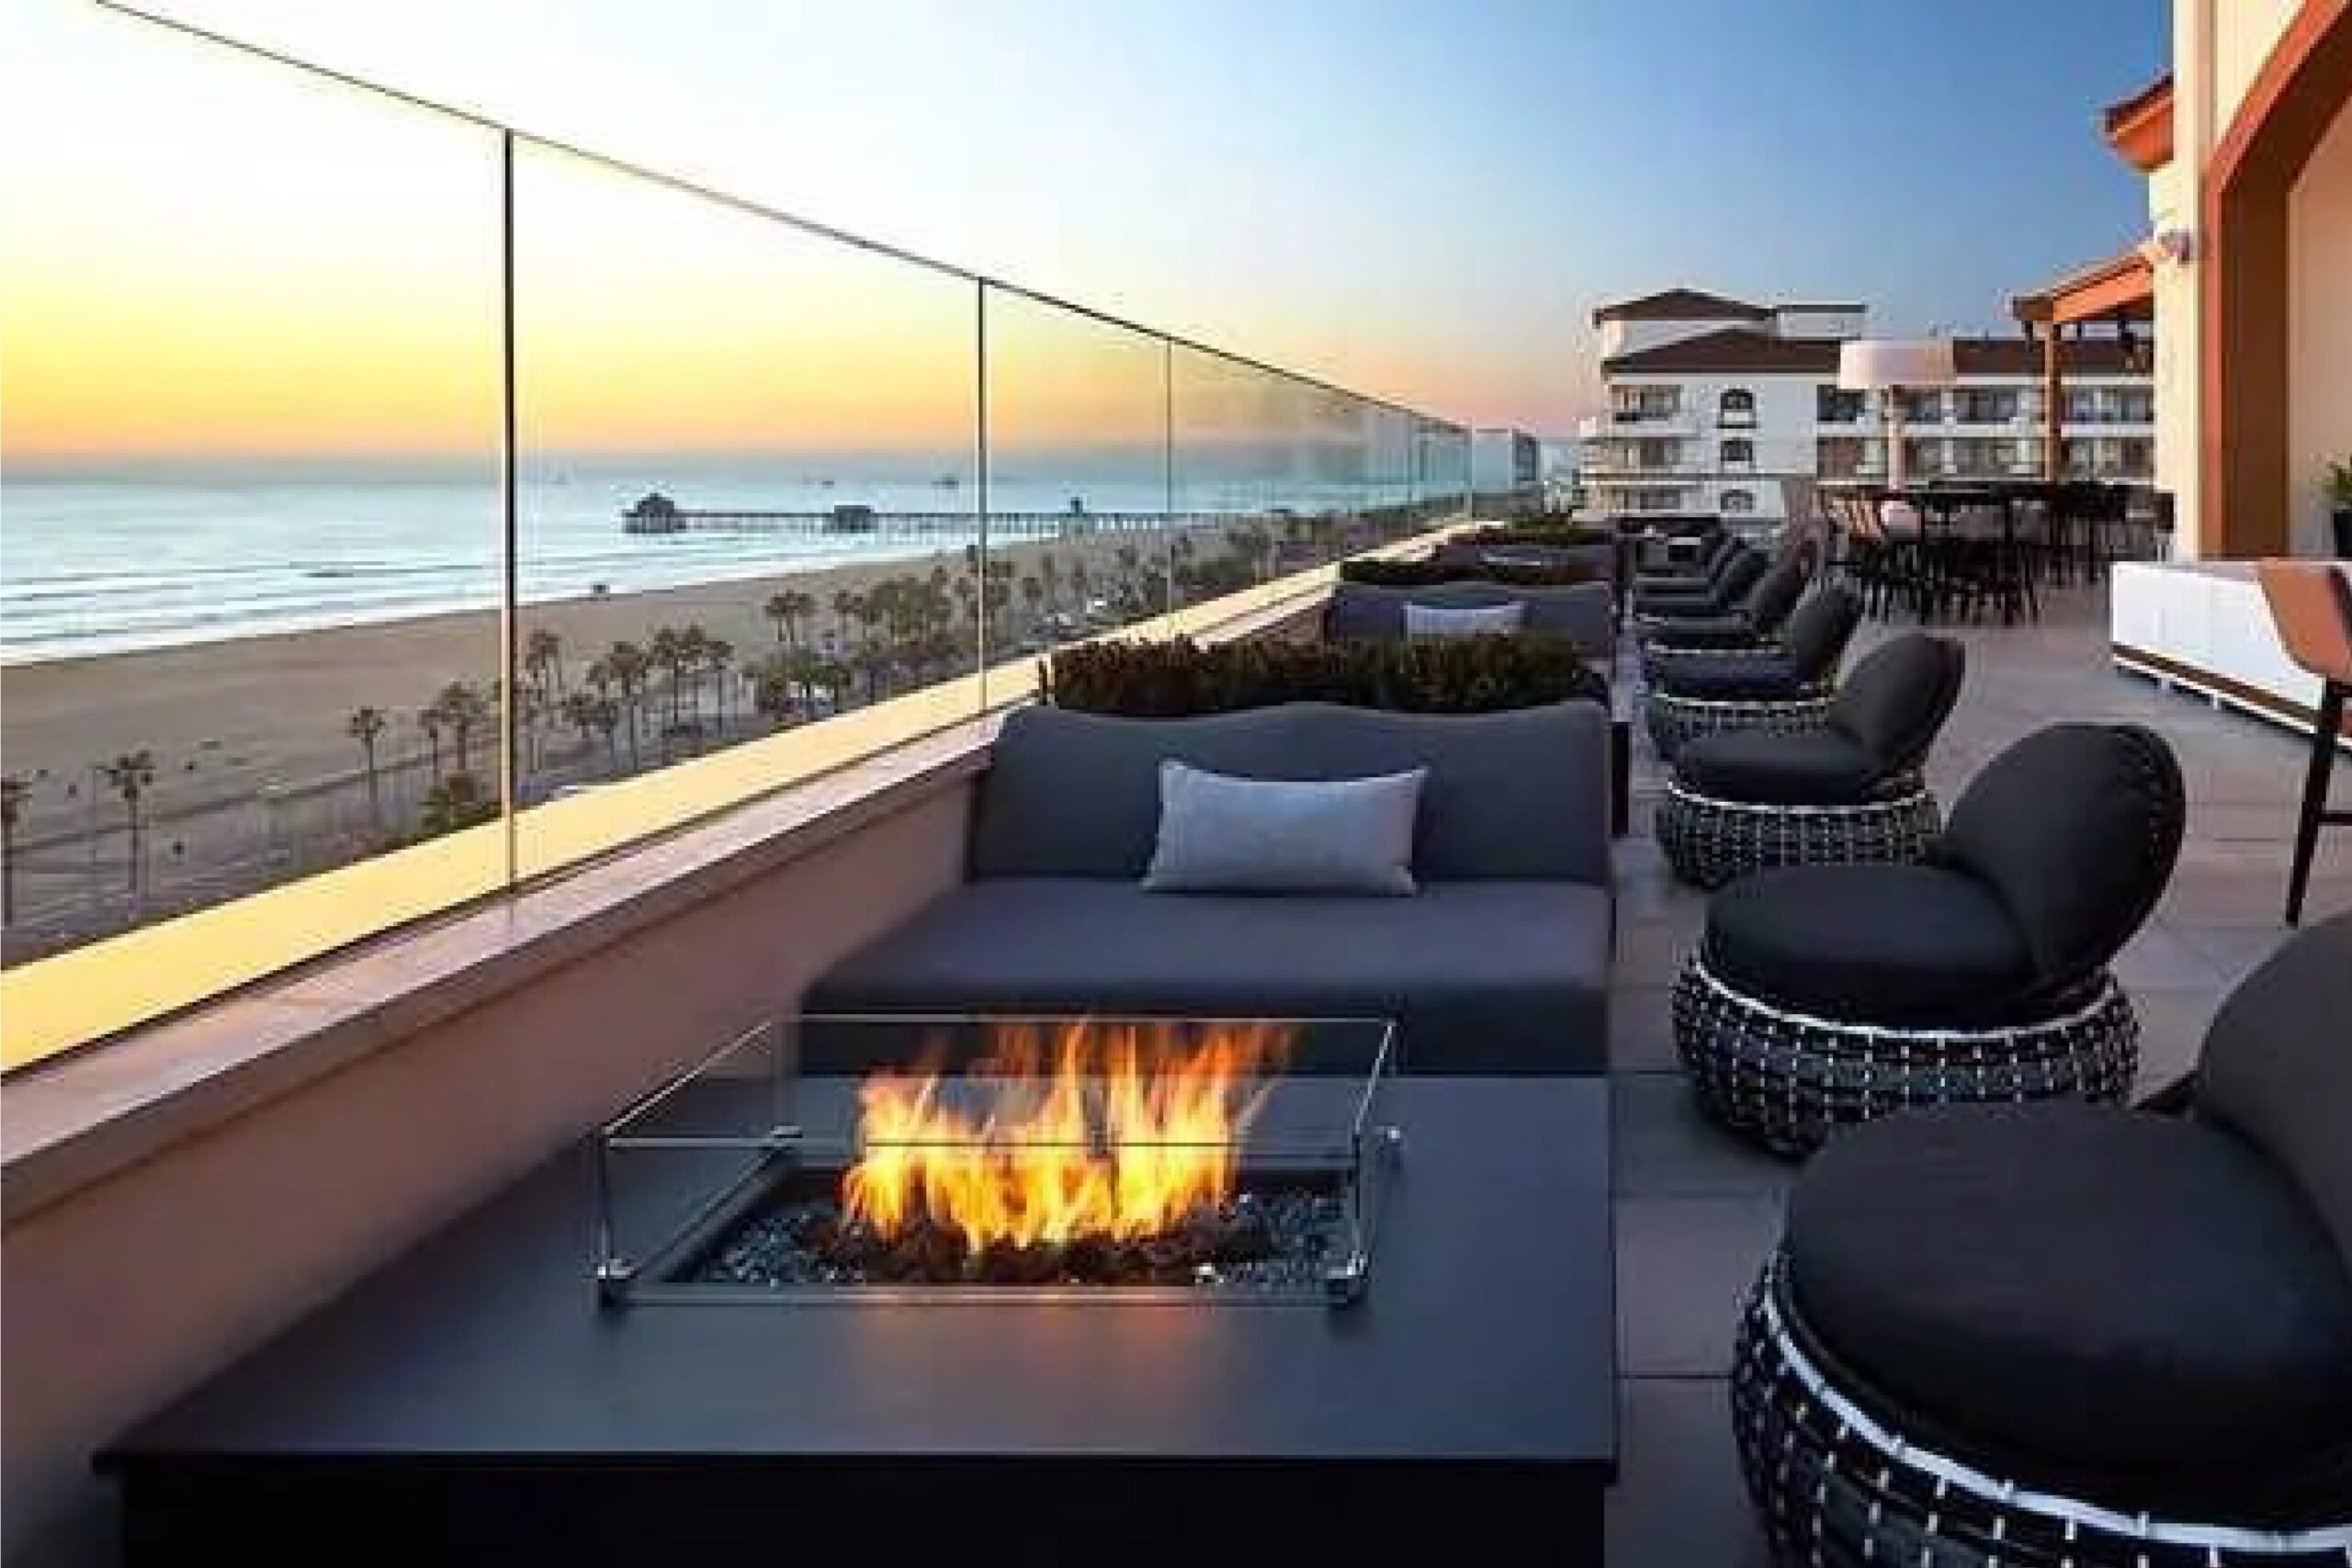 Waterfront Resort viewing deck overlooks beautiful Huntington Beach